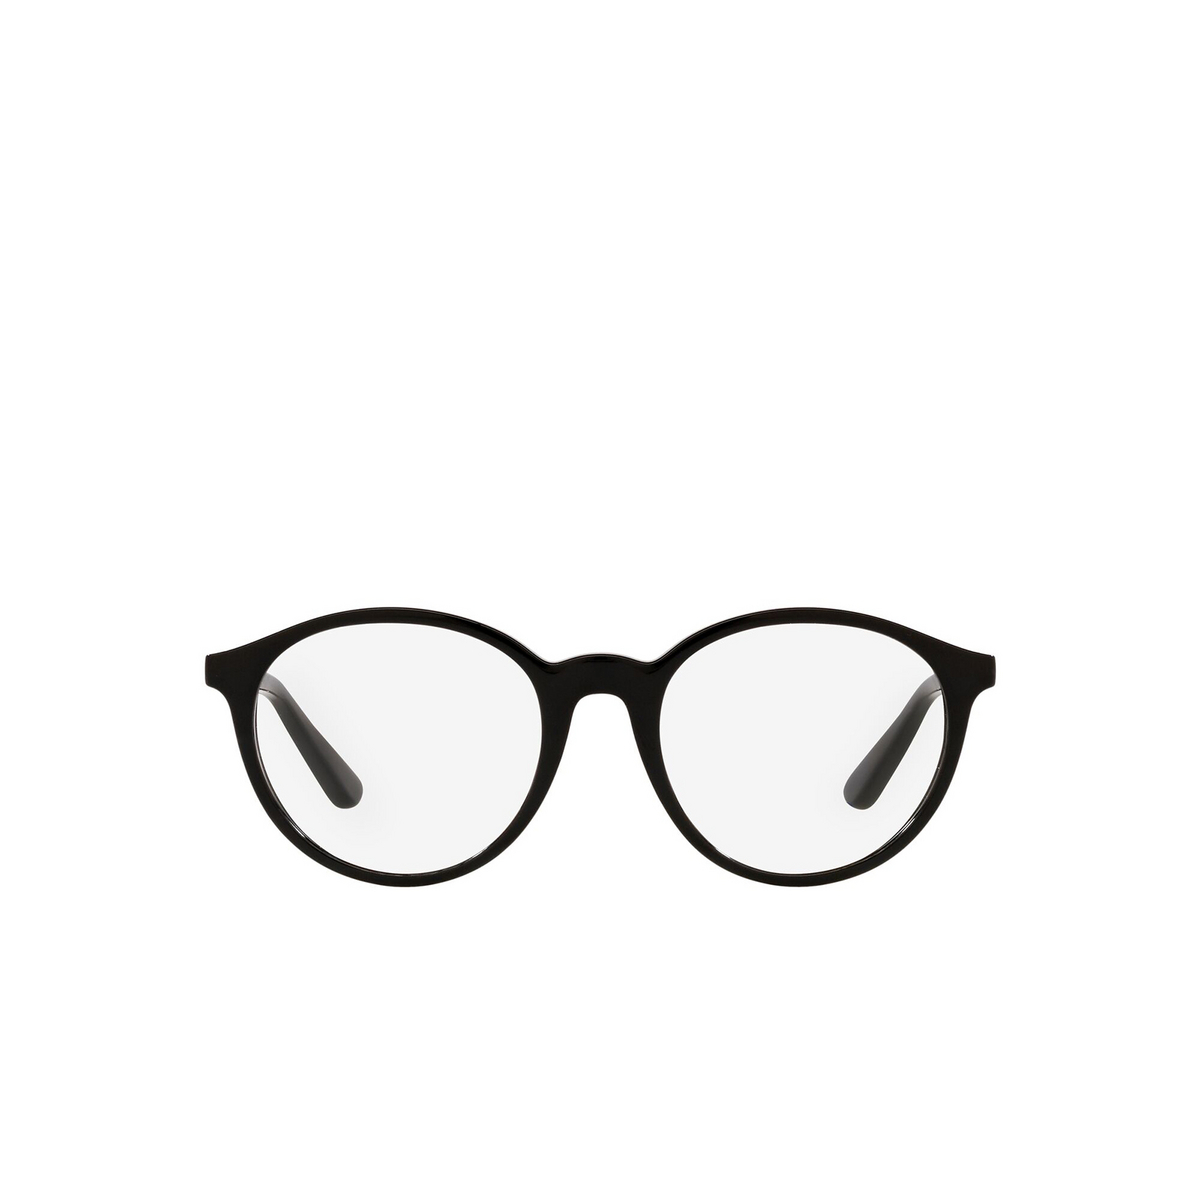 Polo Ralph Lauren® Round Eyeglasses: PH2236 color Shiny Black 5001 - front view.